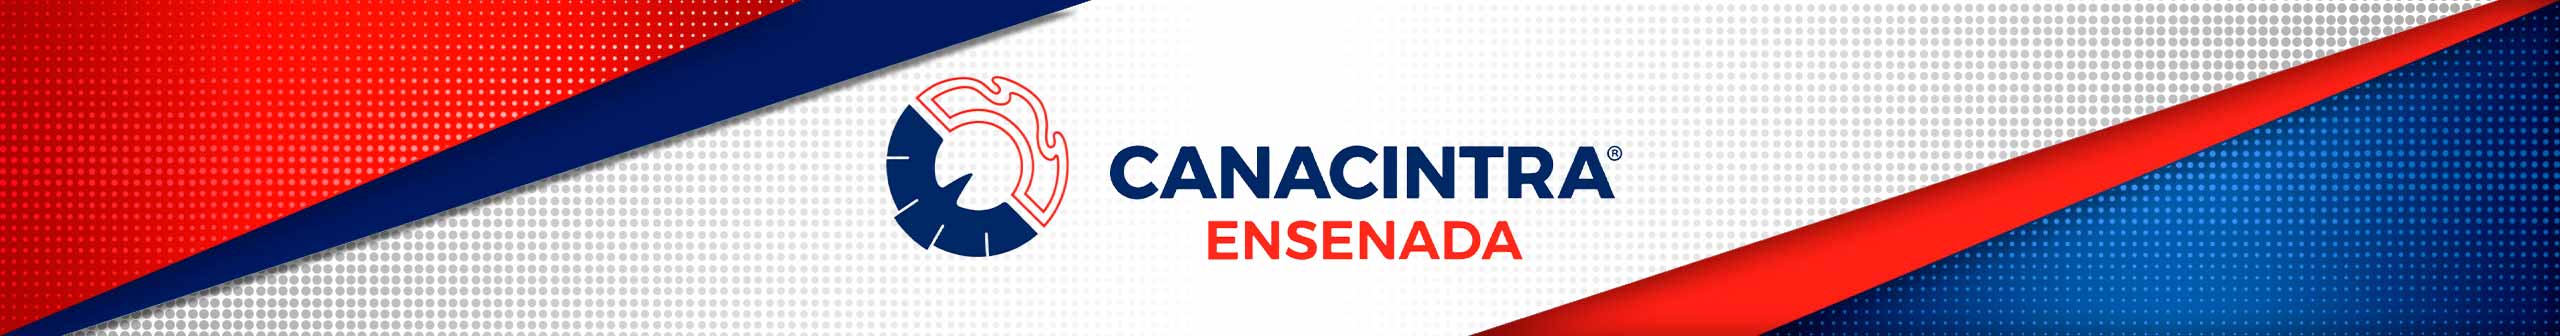 Canacintra Ensenada